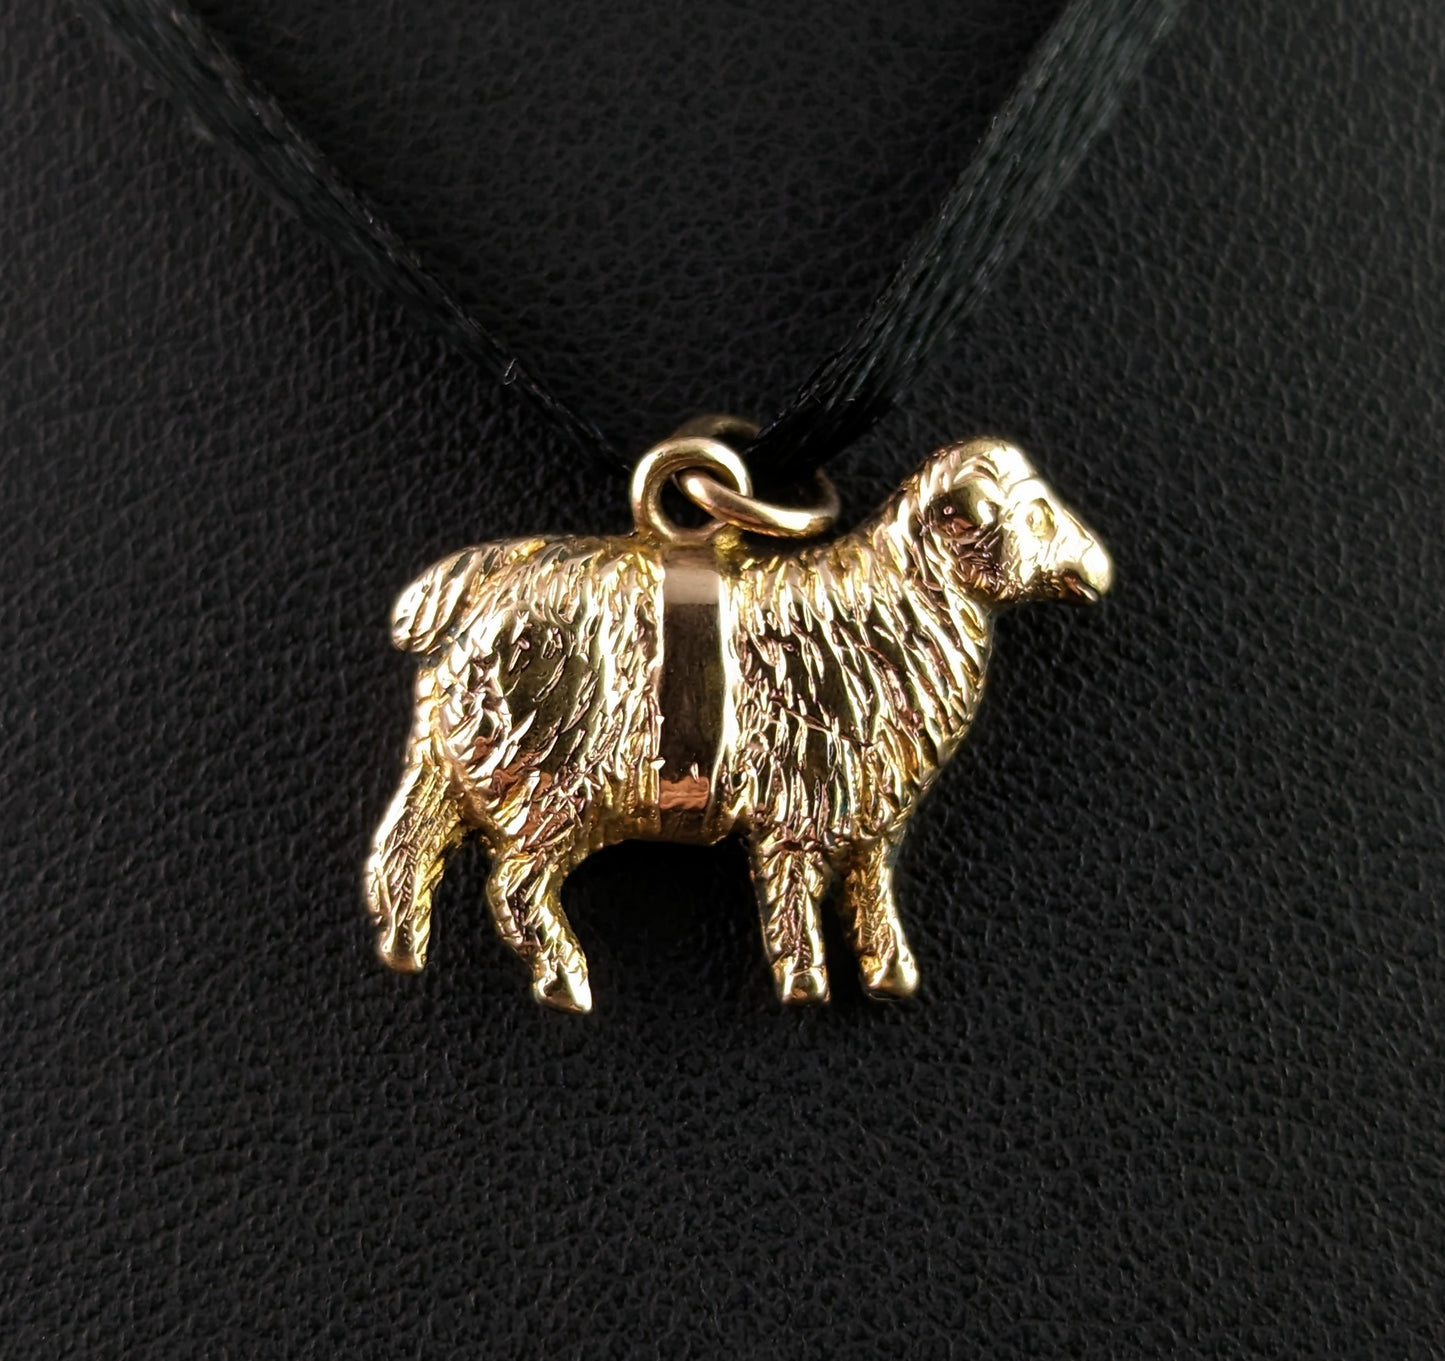 Antique 9ct gold prize sheep charm, pendant